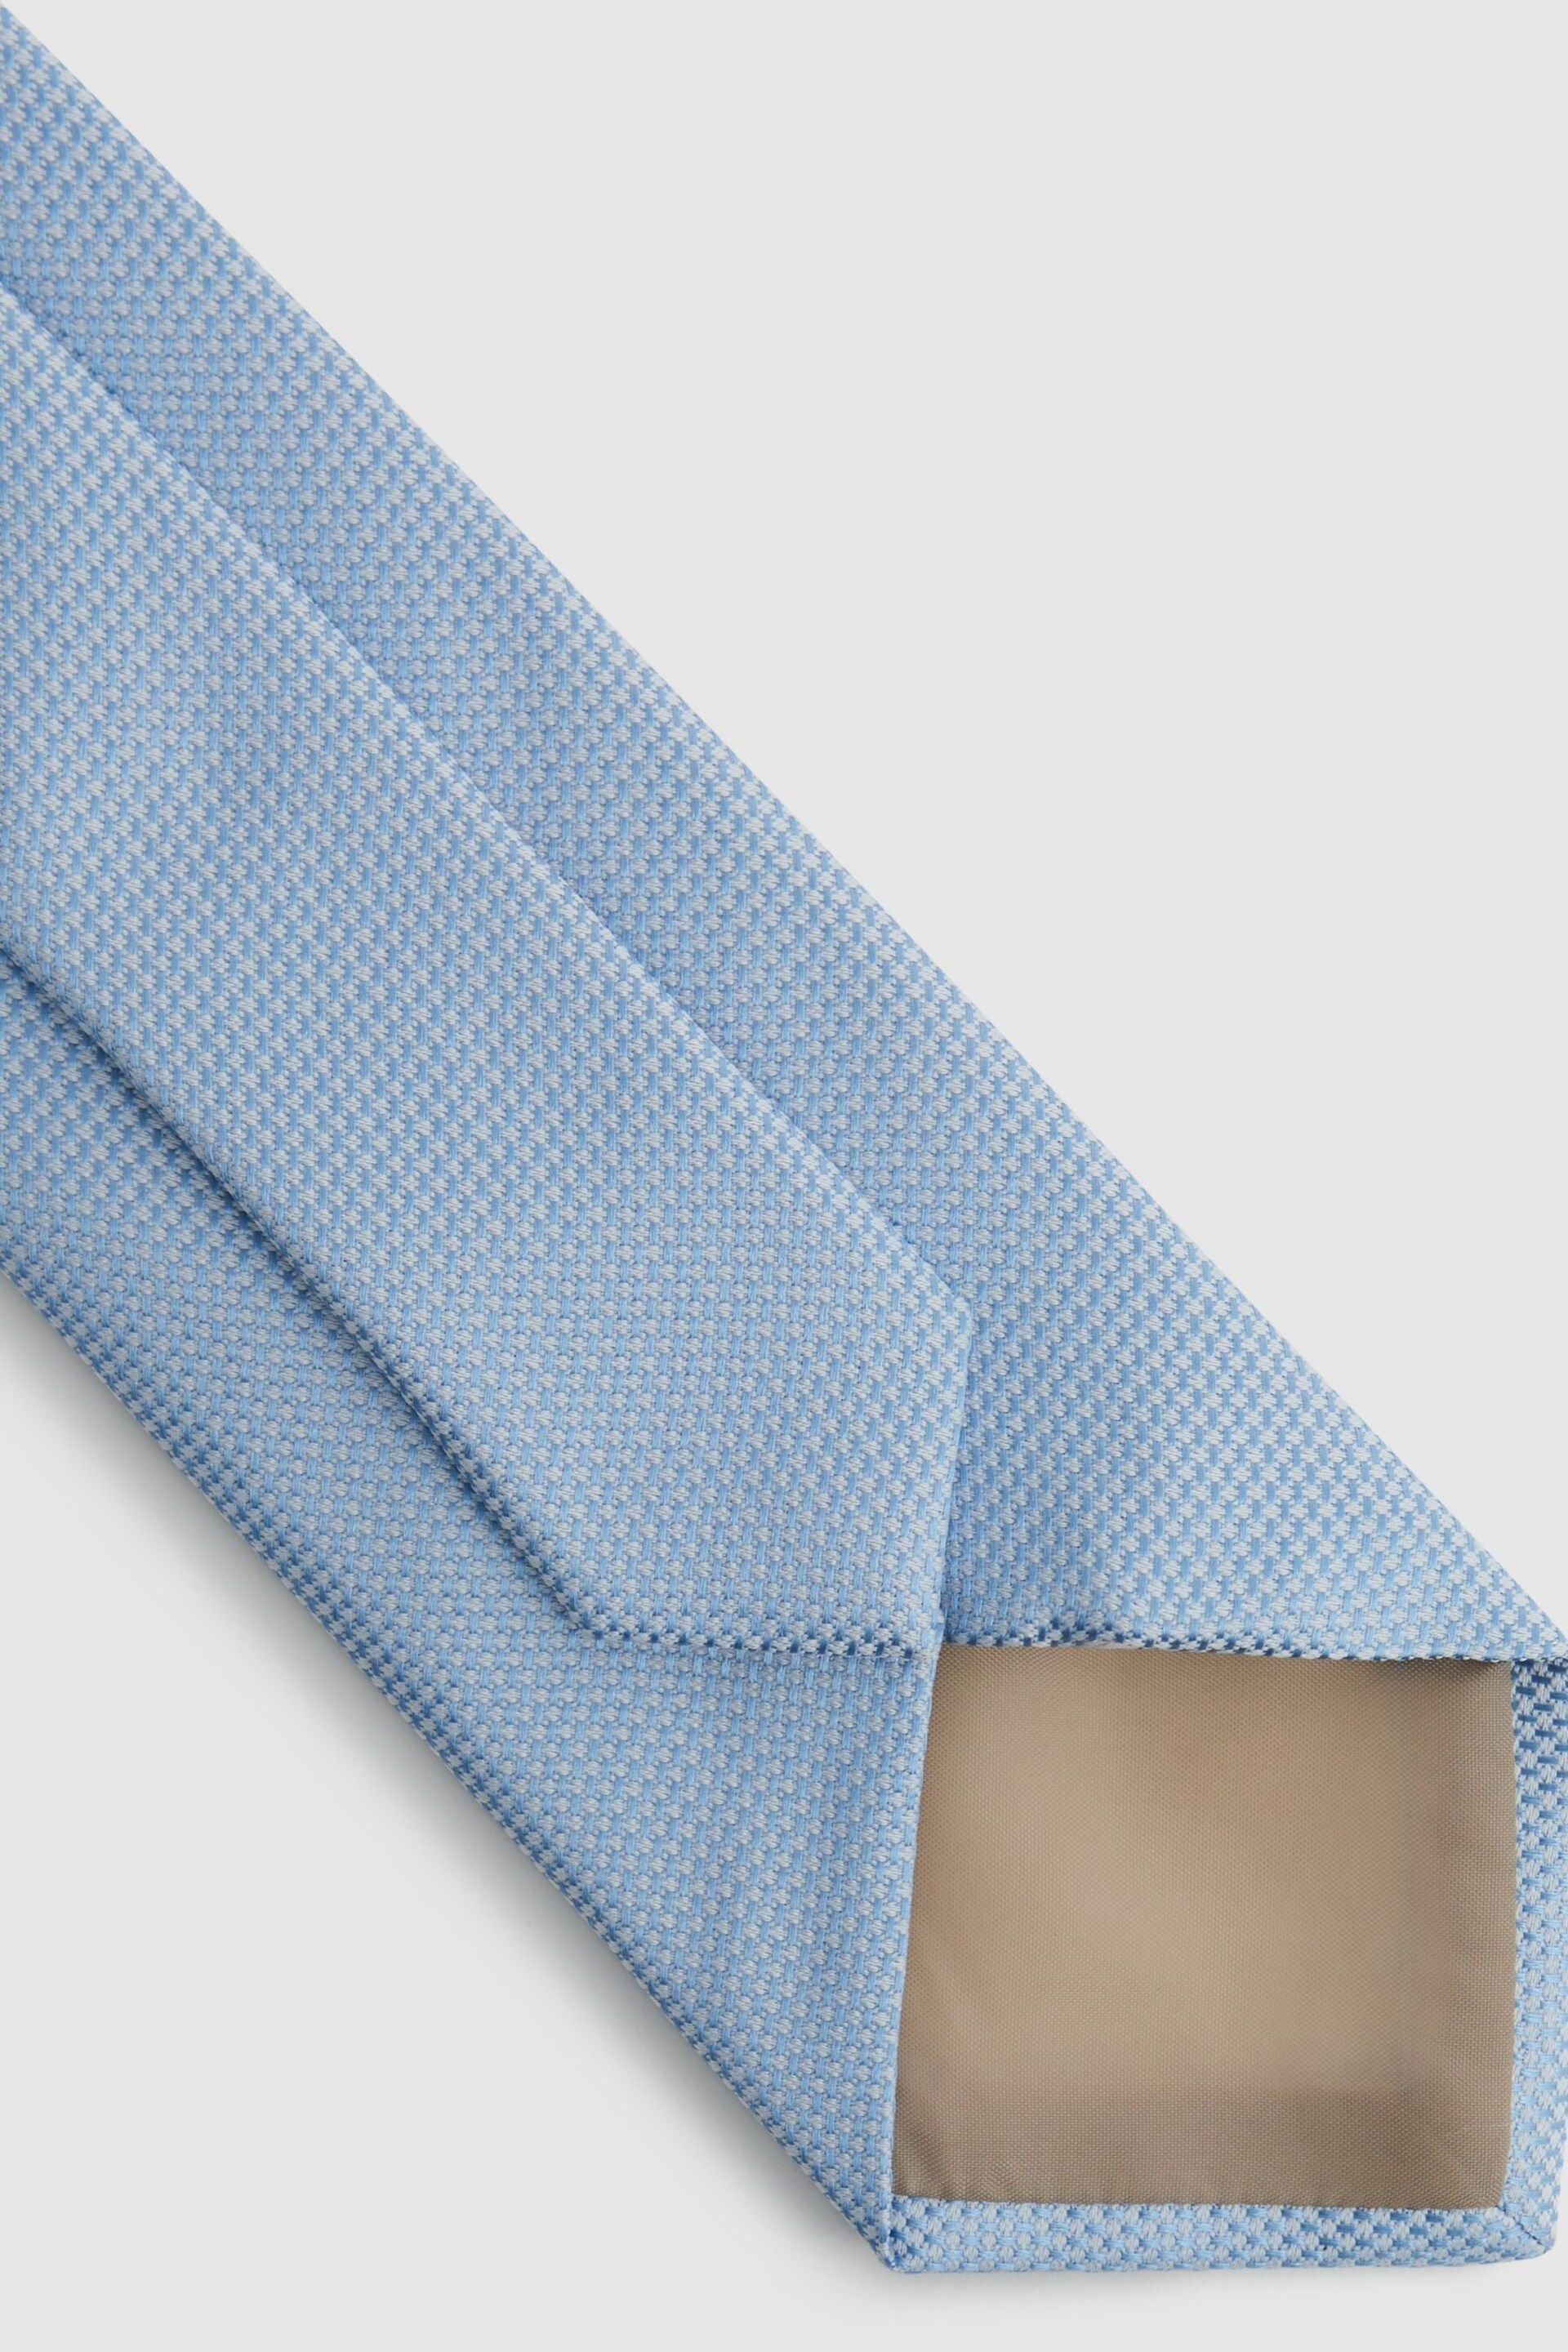 Reiss Soft Blue Ceremony Textured Silk Blend Tie - Image 4 of 5